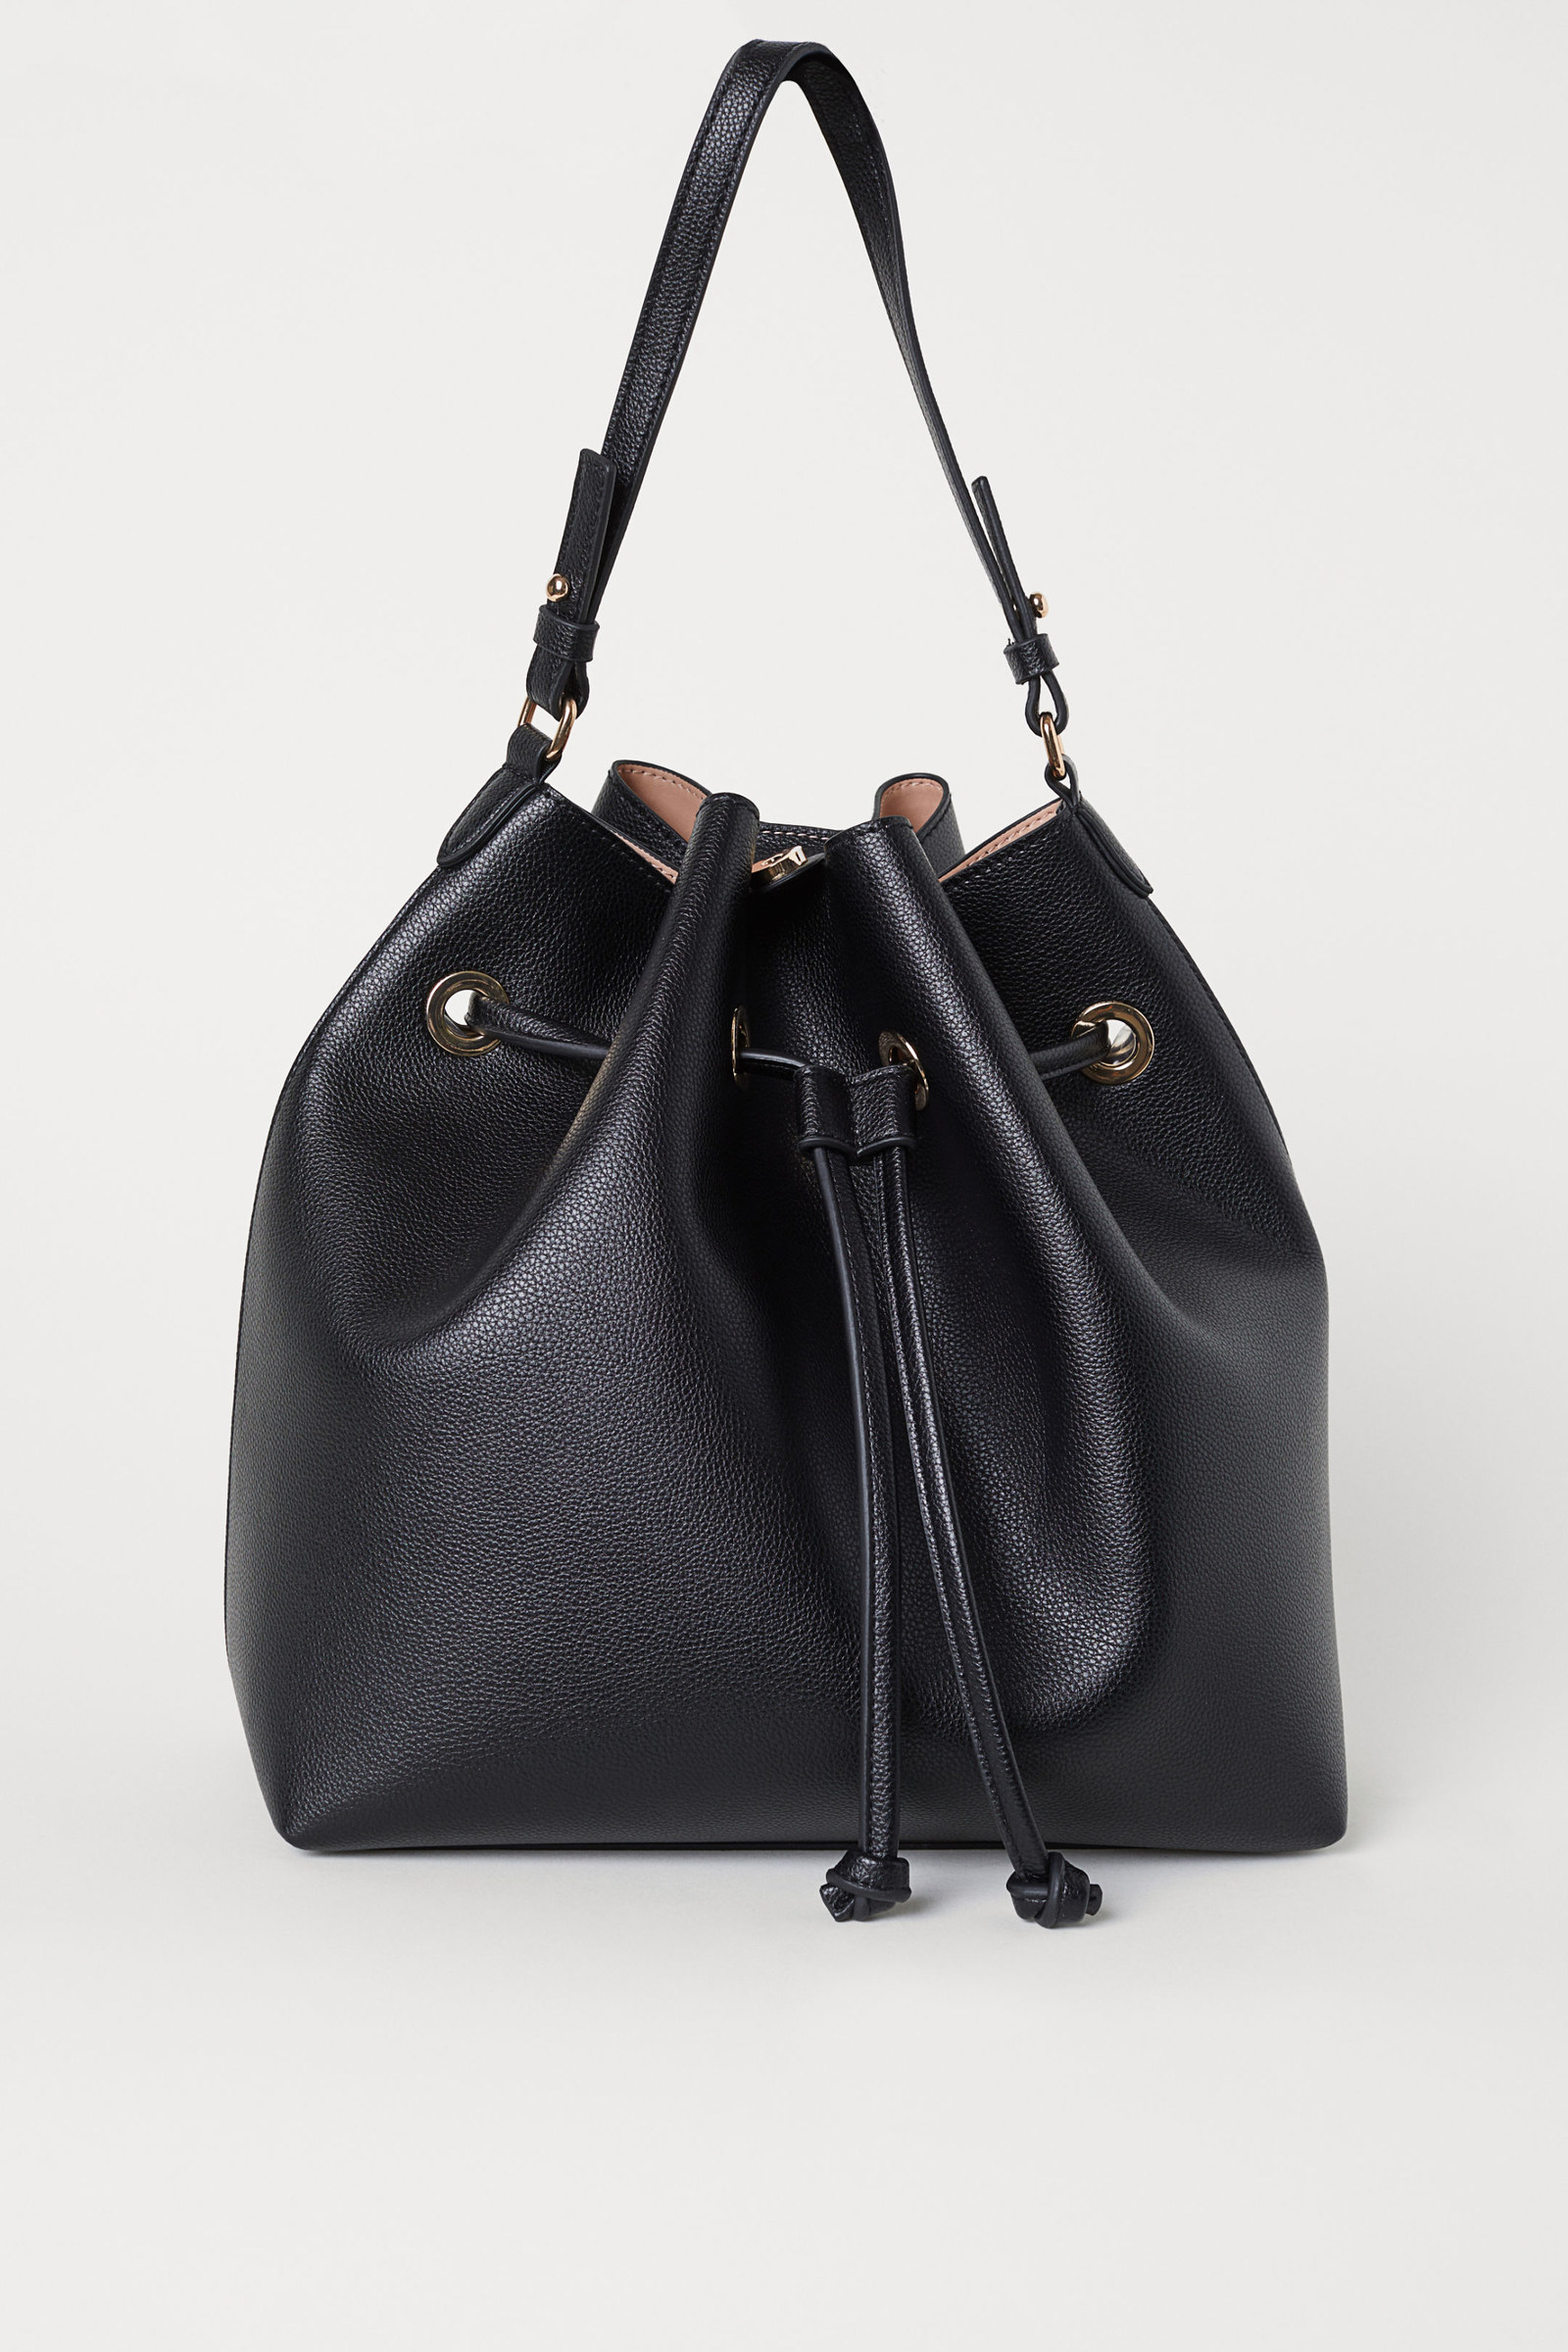 affordable handbags online